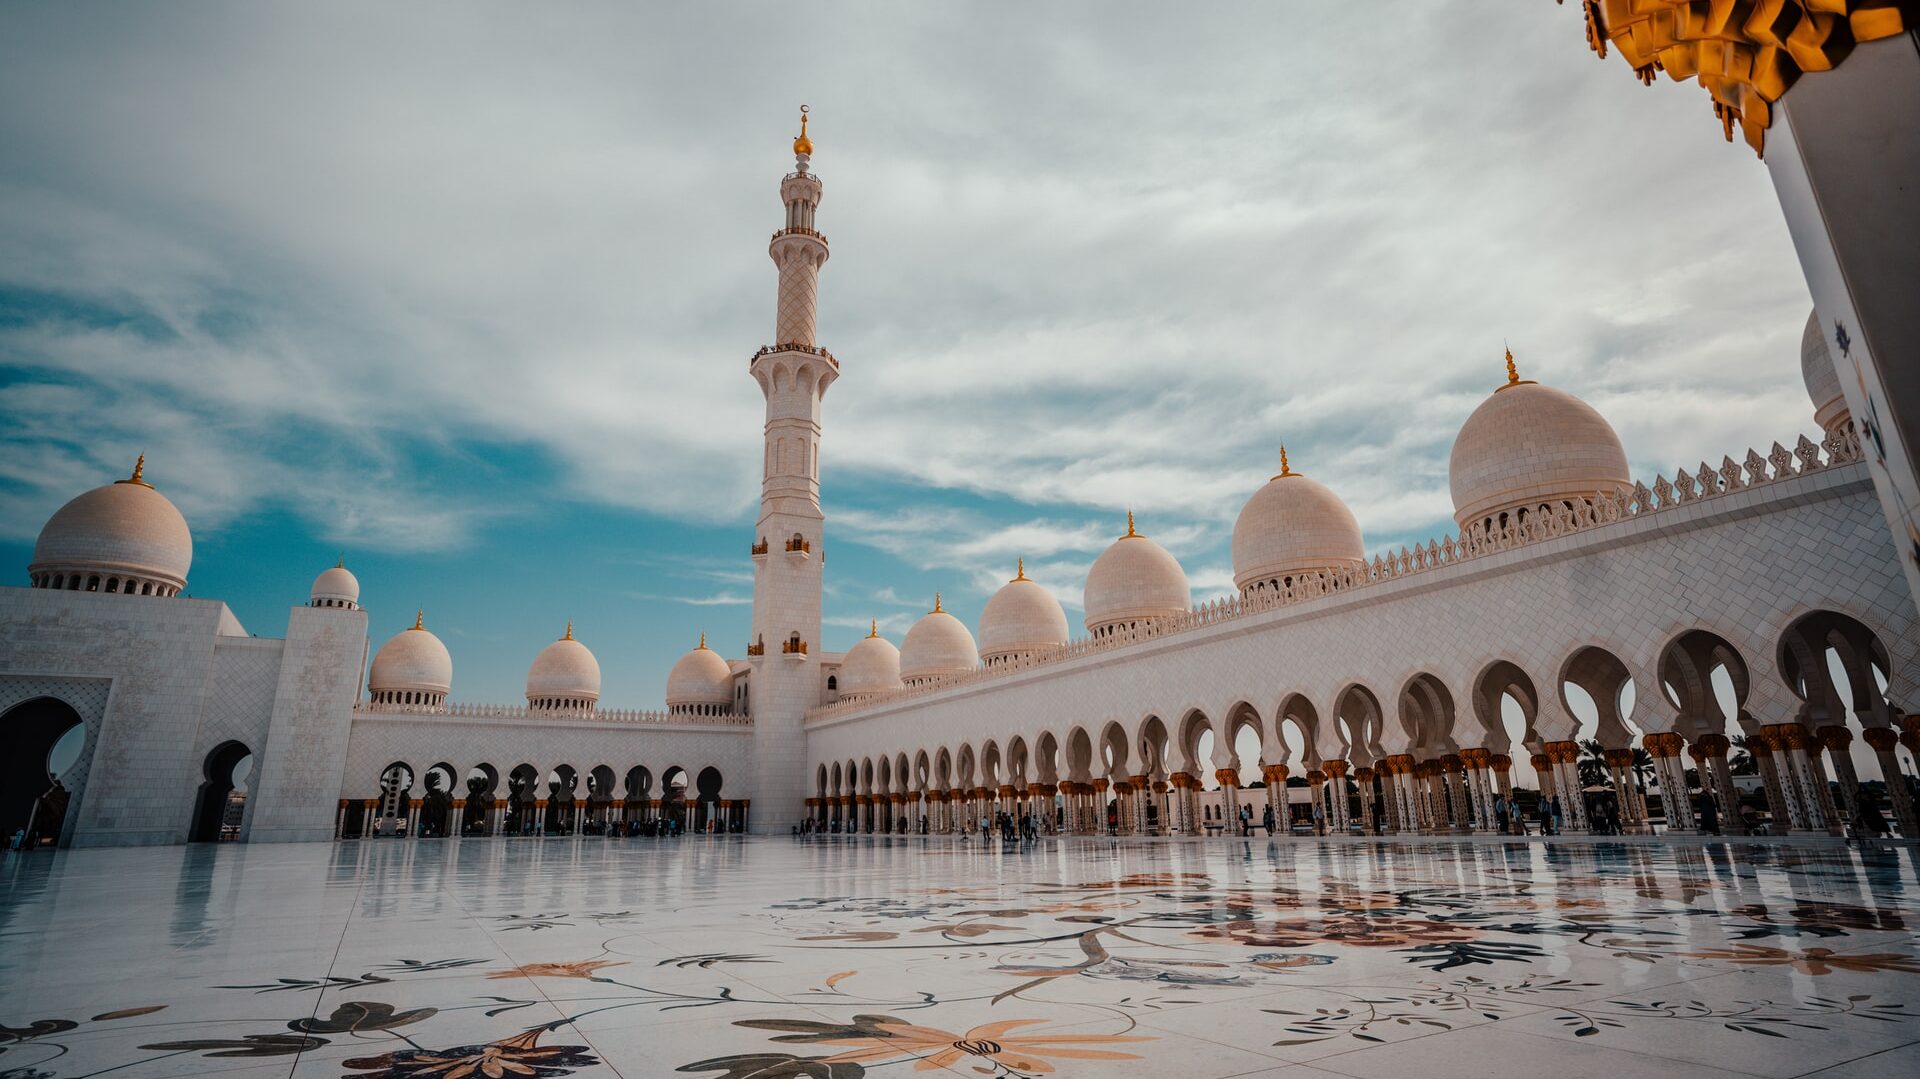 ABU DHABI Grand Mosque or Sheikh Zayed Grand Mosque